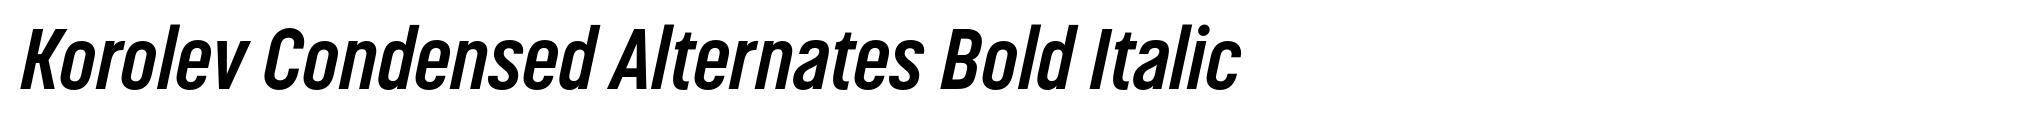 Korolev Condensed Alternates Bold Italic image